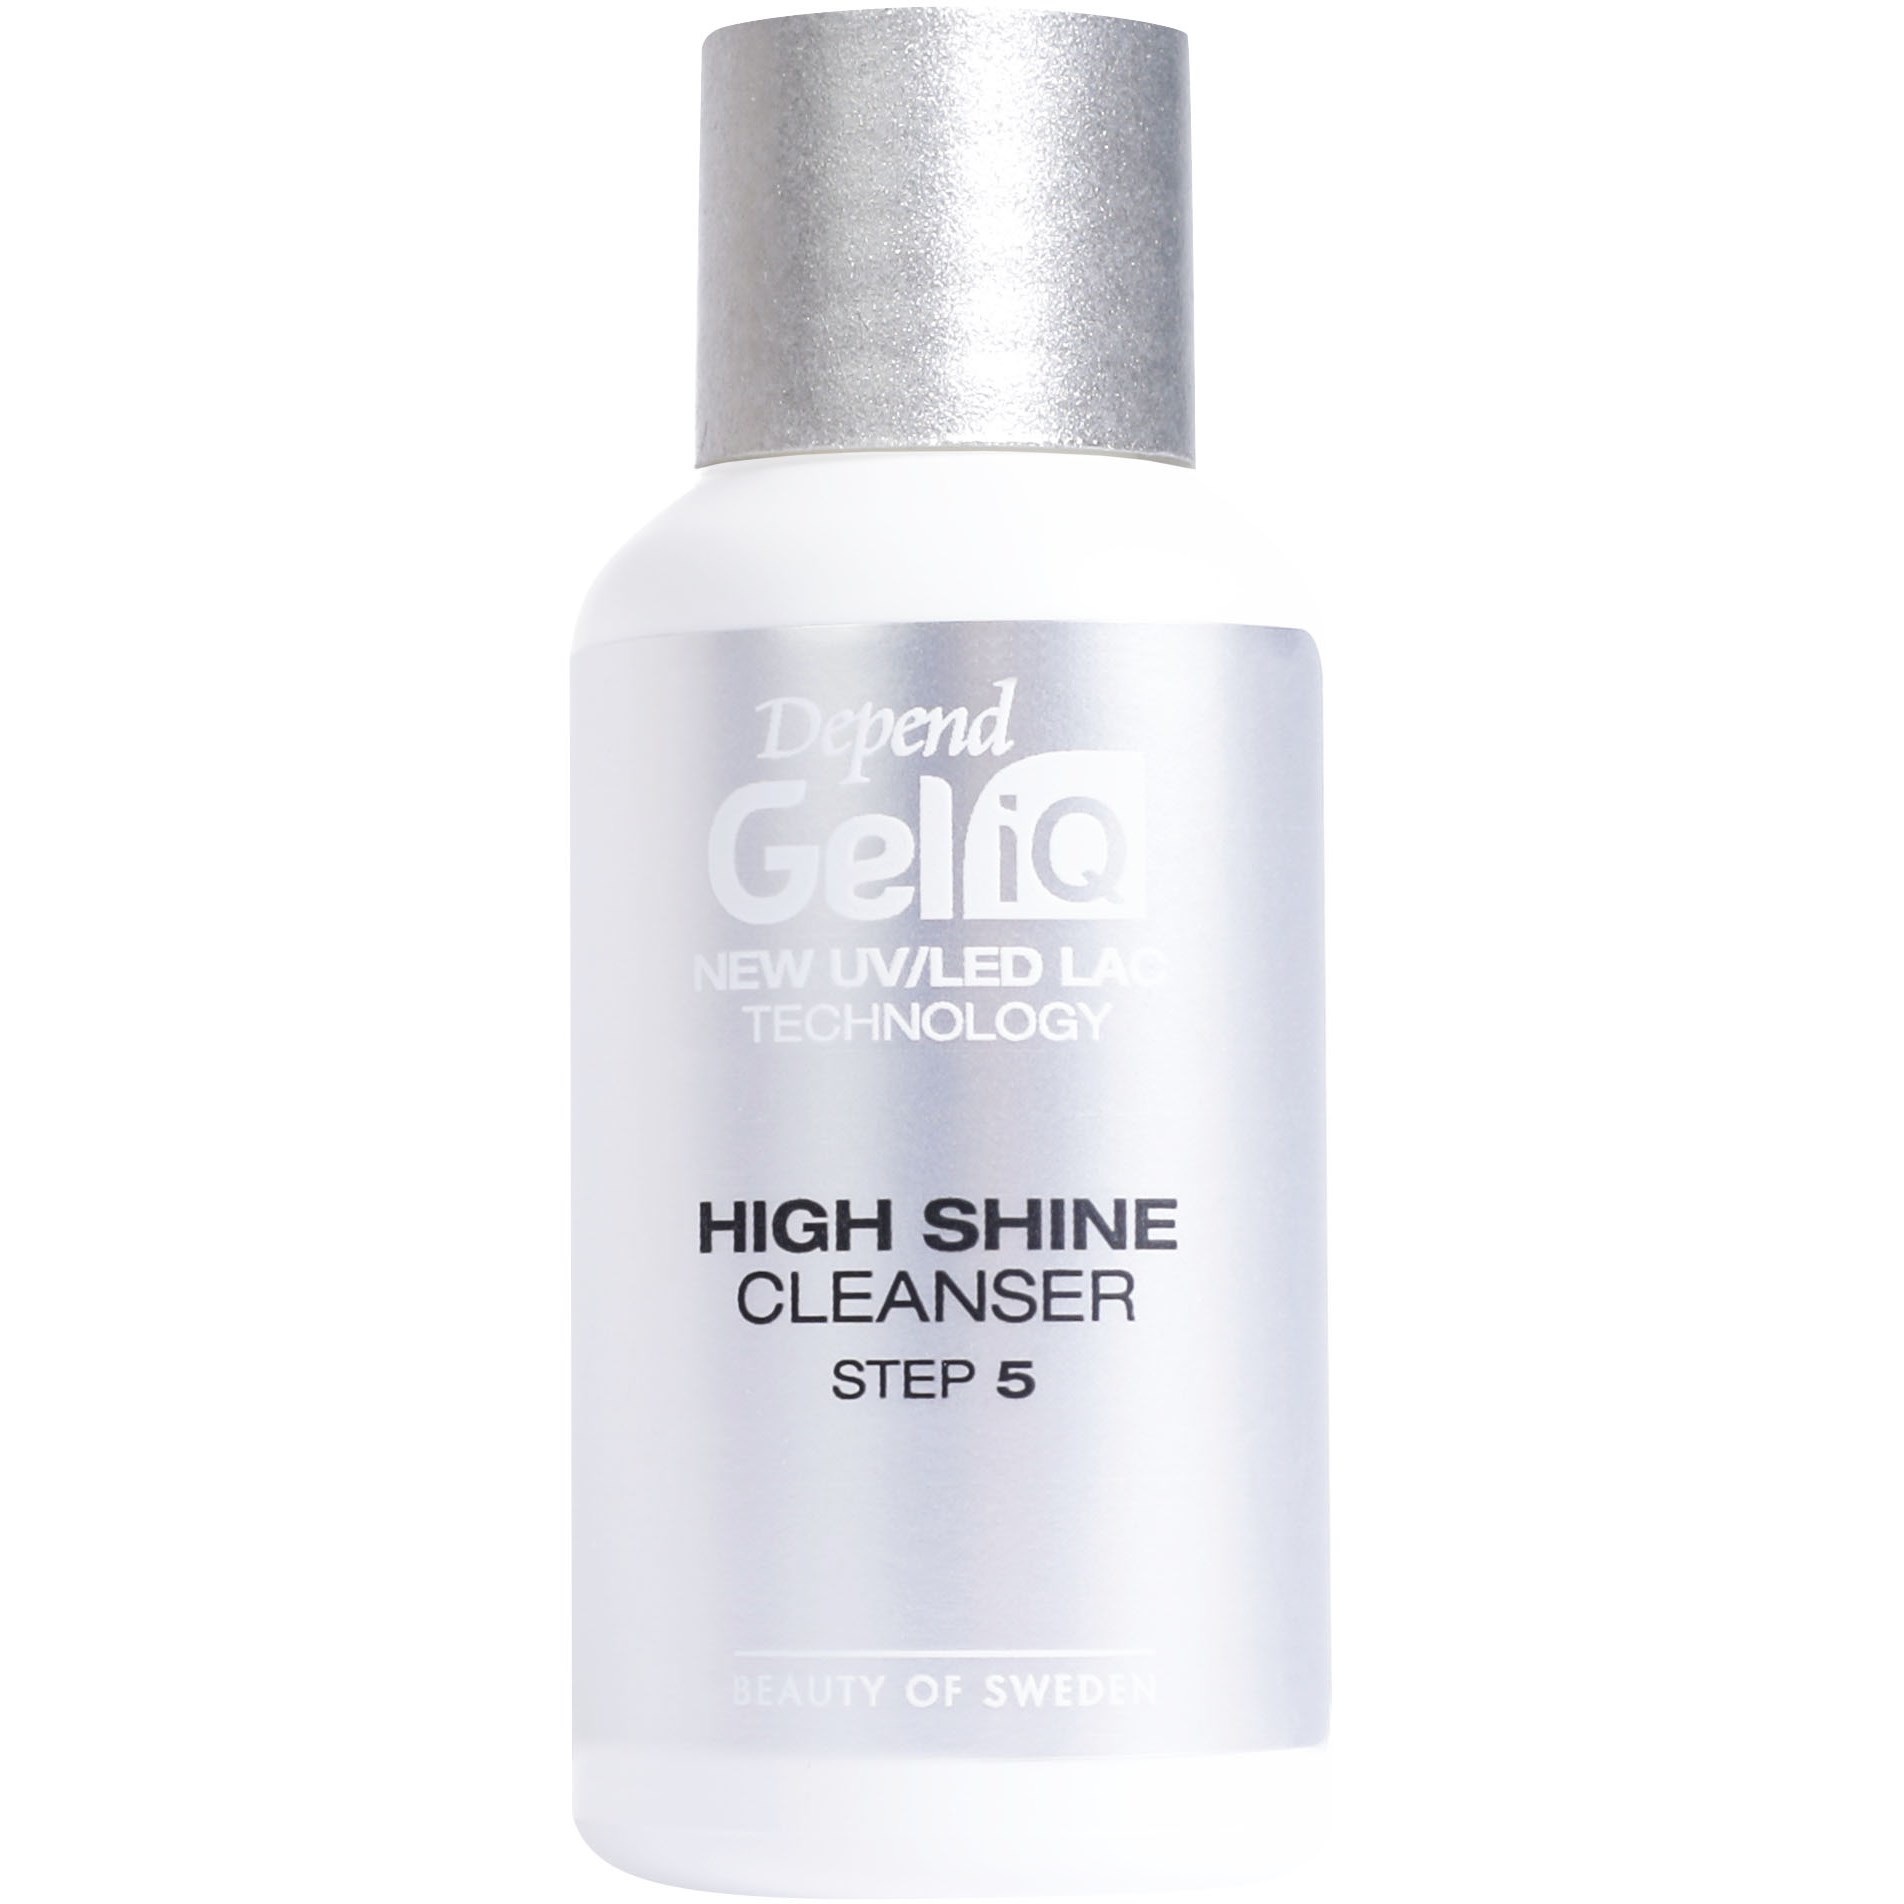 Läs mer om Depend Gel iQ High Shine Cleanser Step 5 35 ml